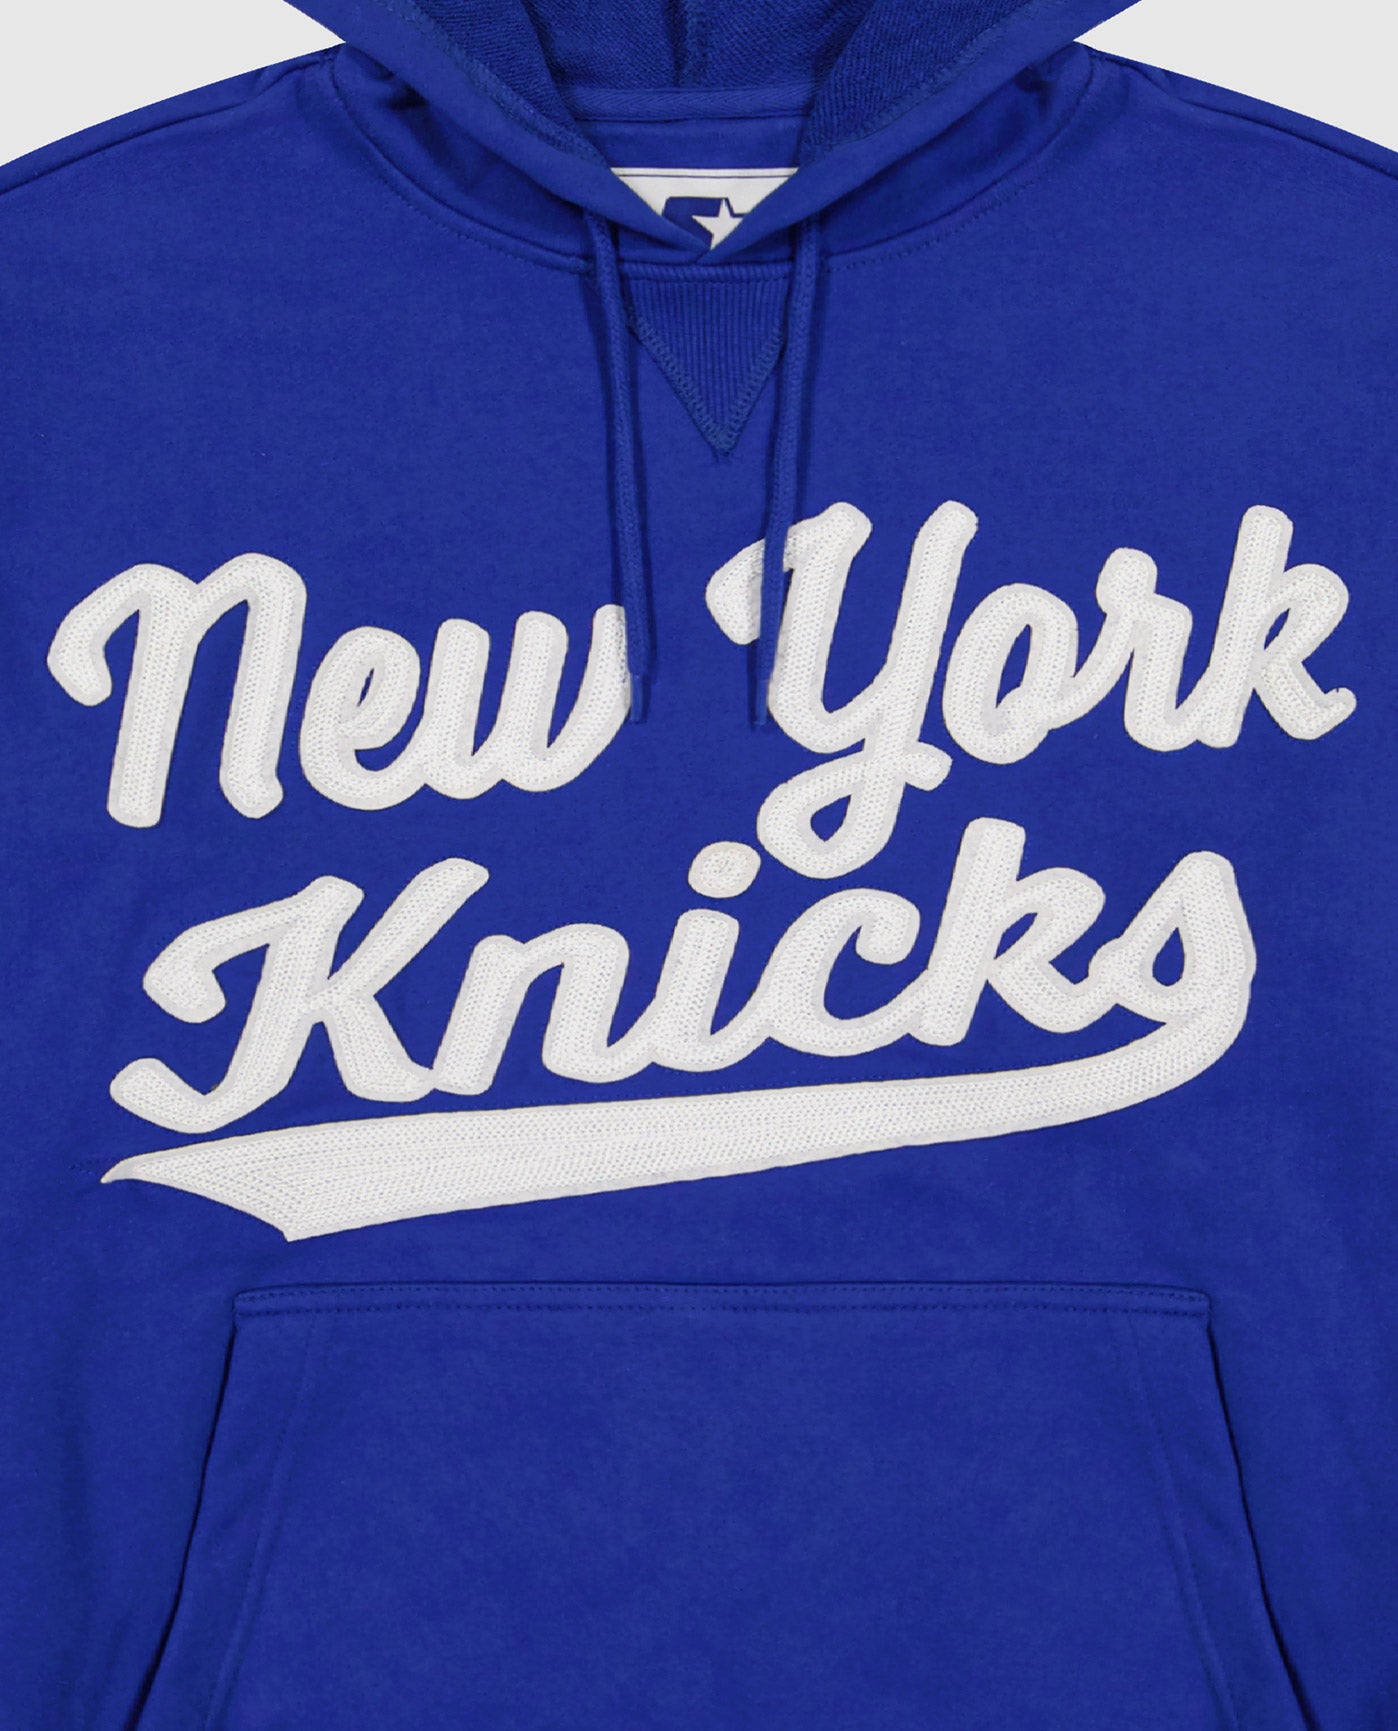 New York Knicks logo writing middle front | Knicks Blue